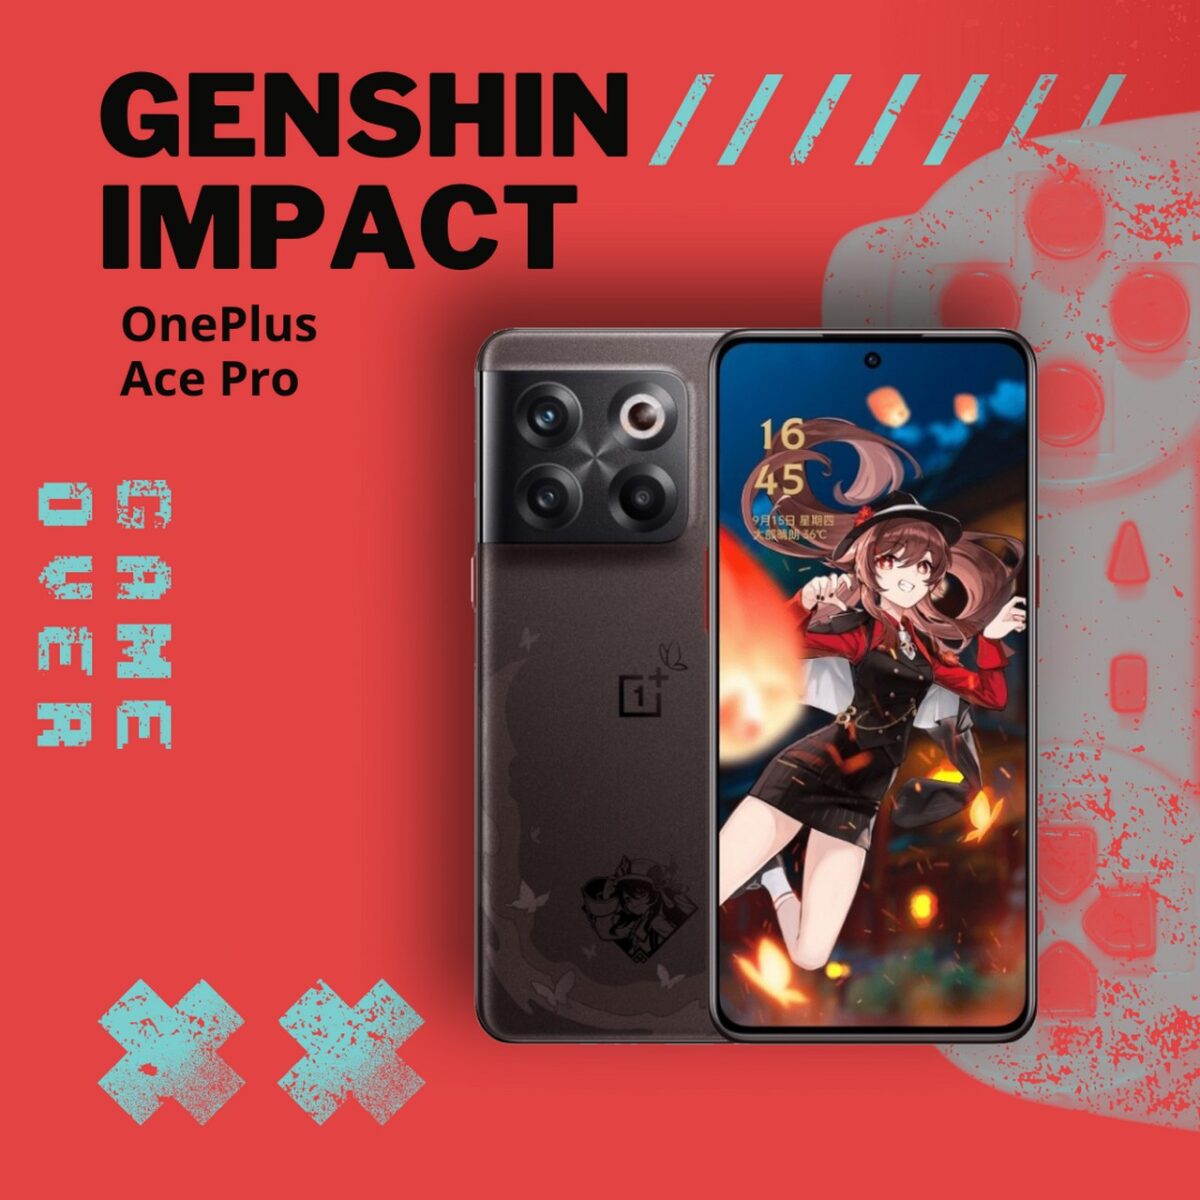 oneplus ace pro genshin impact